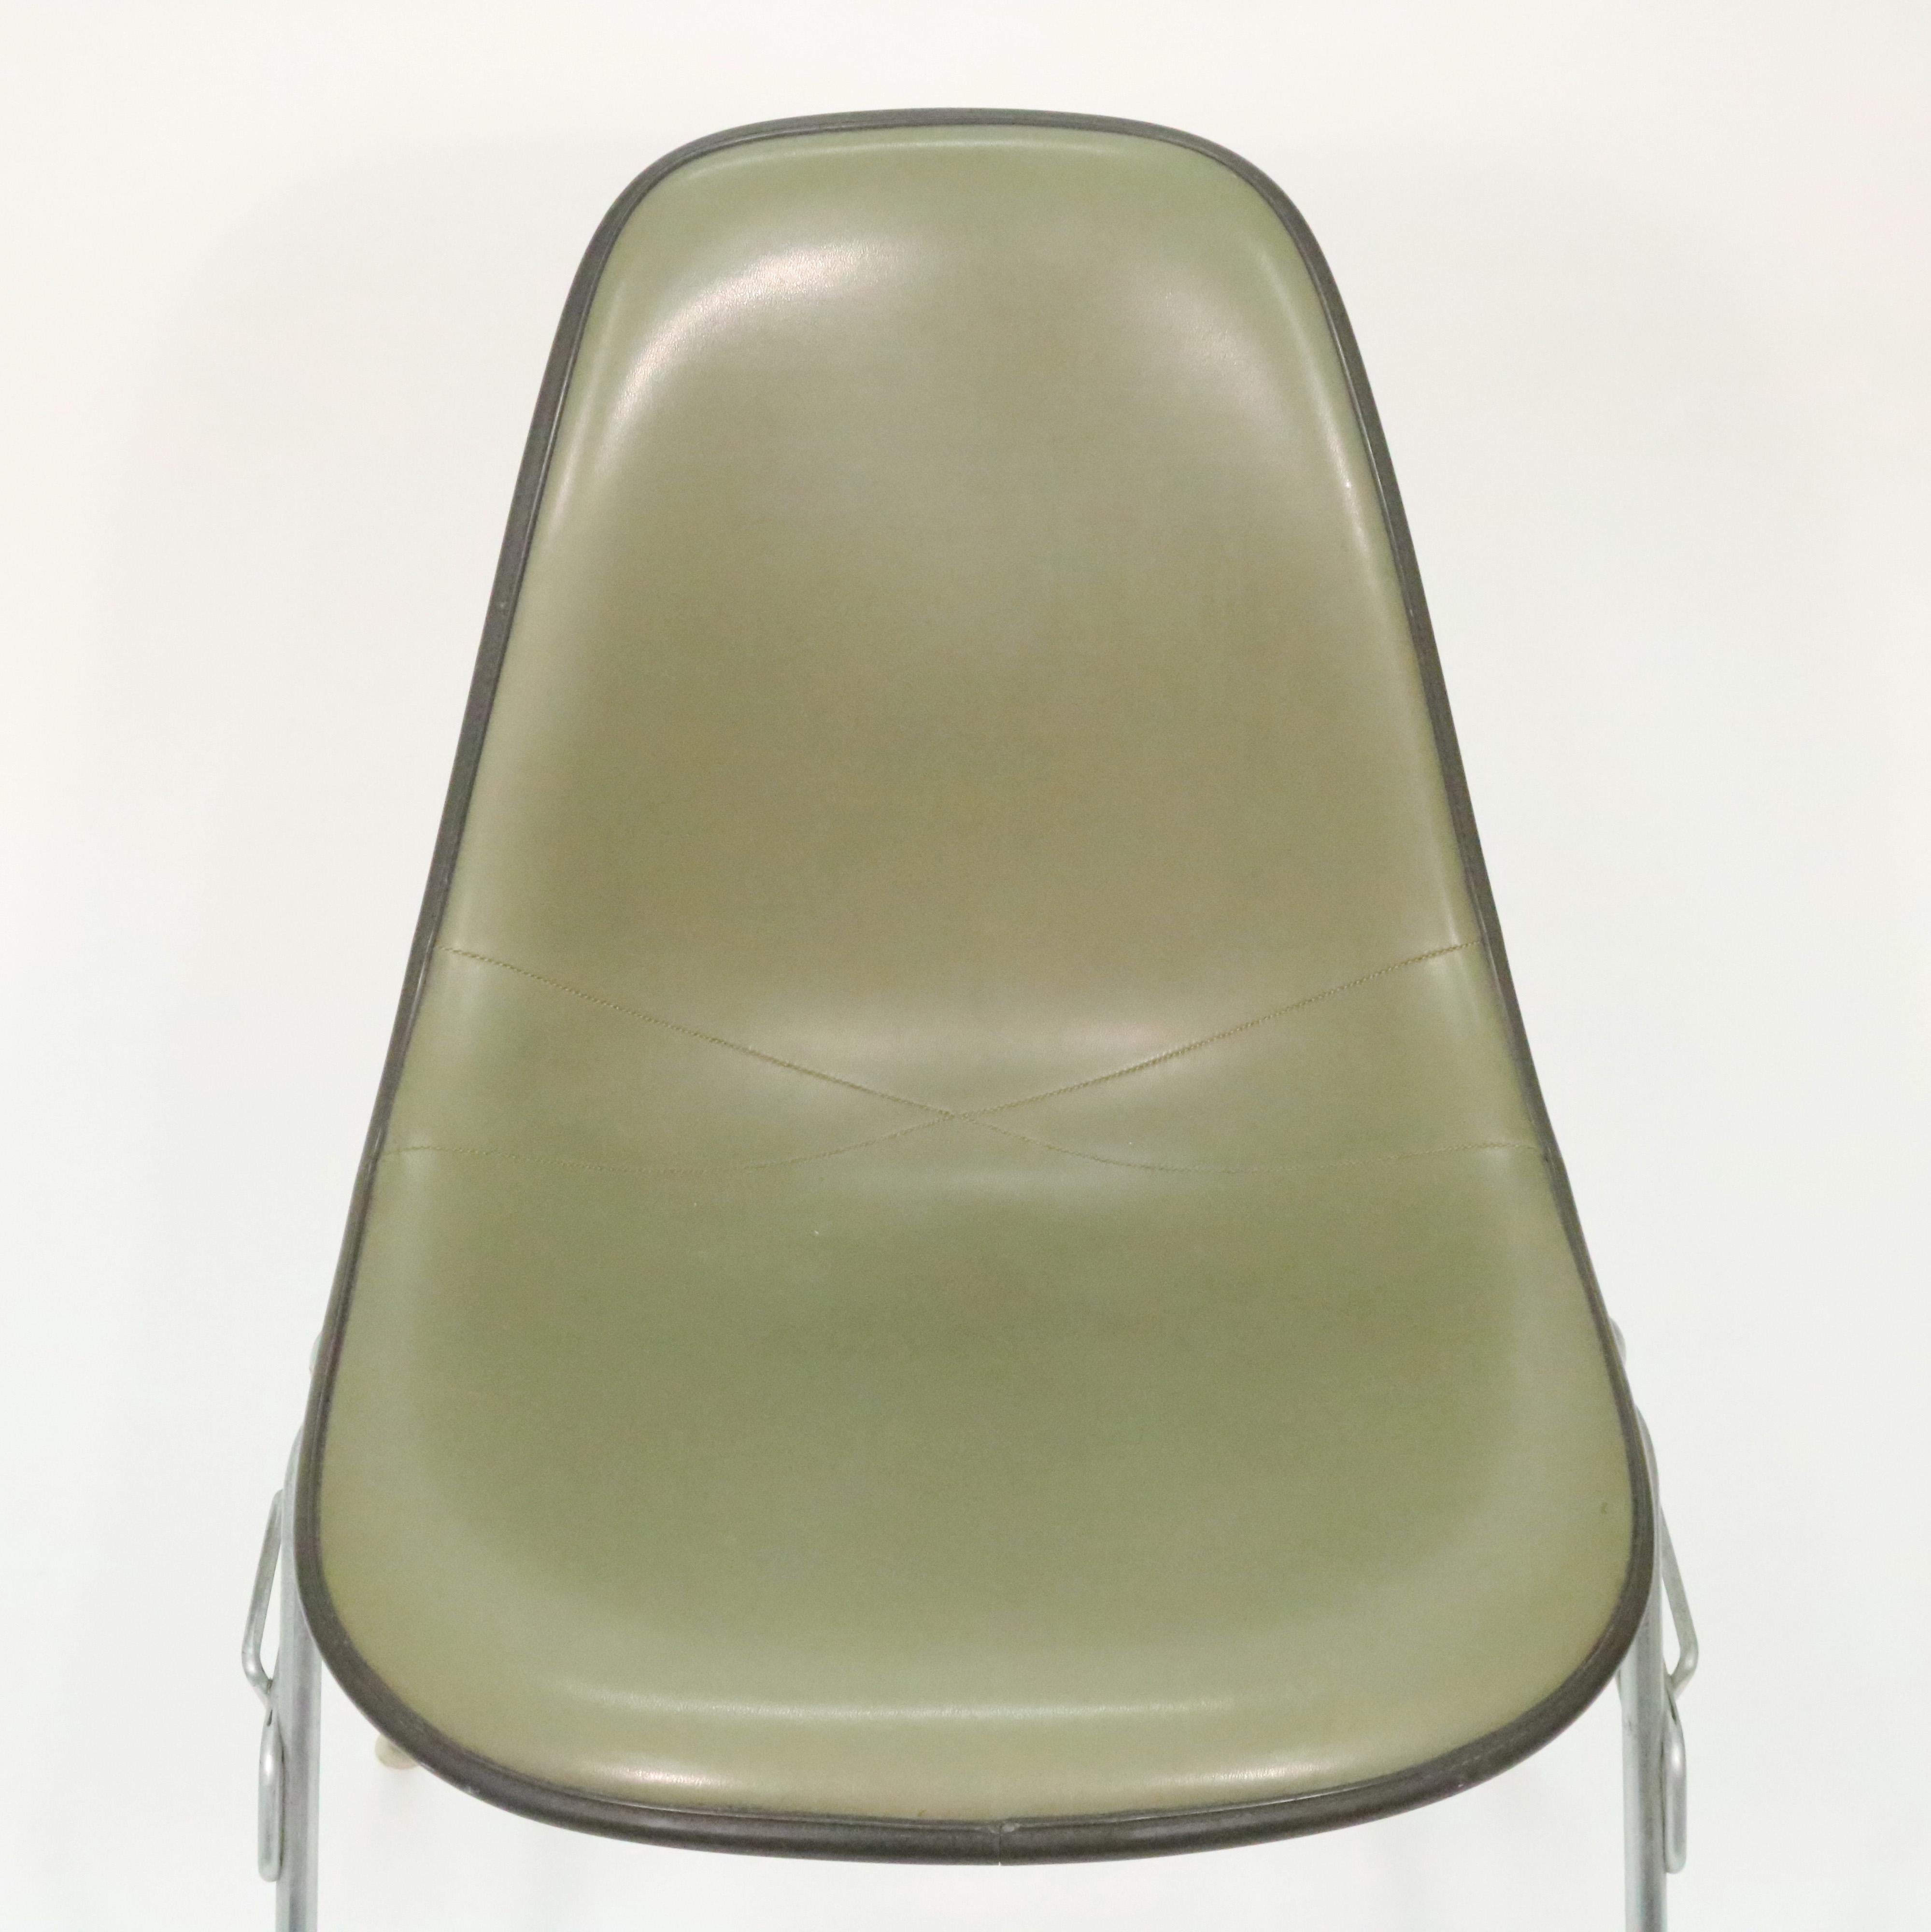 Aluminum Eames for Herman Miller Fiberglass Shell Chair, Green on Stackable Base